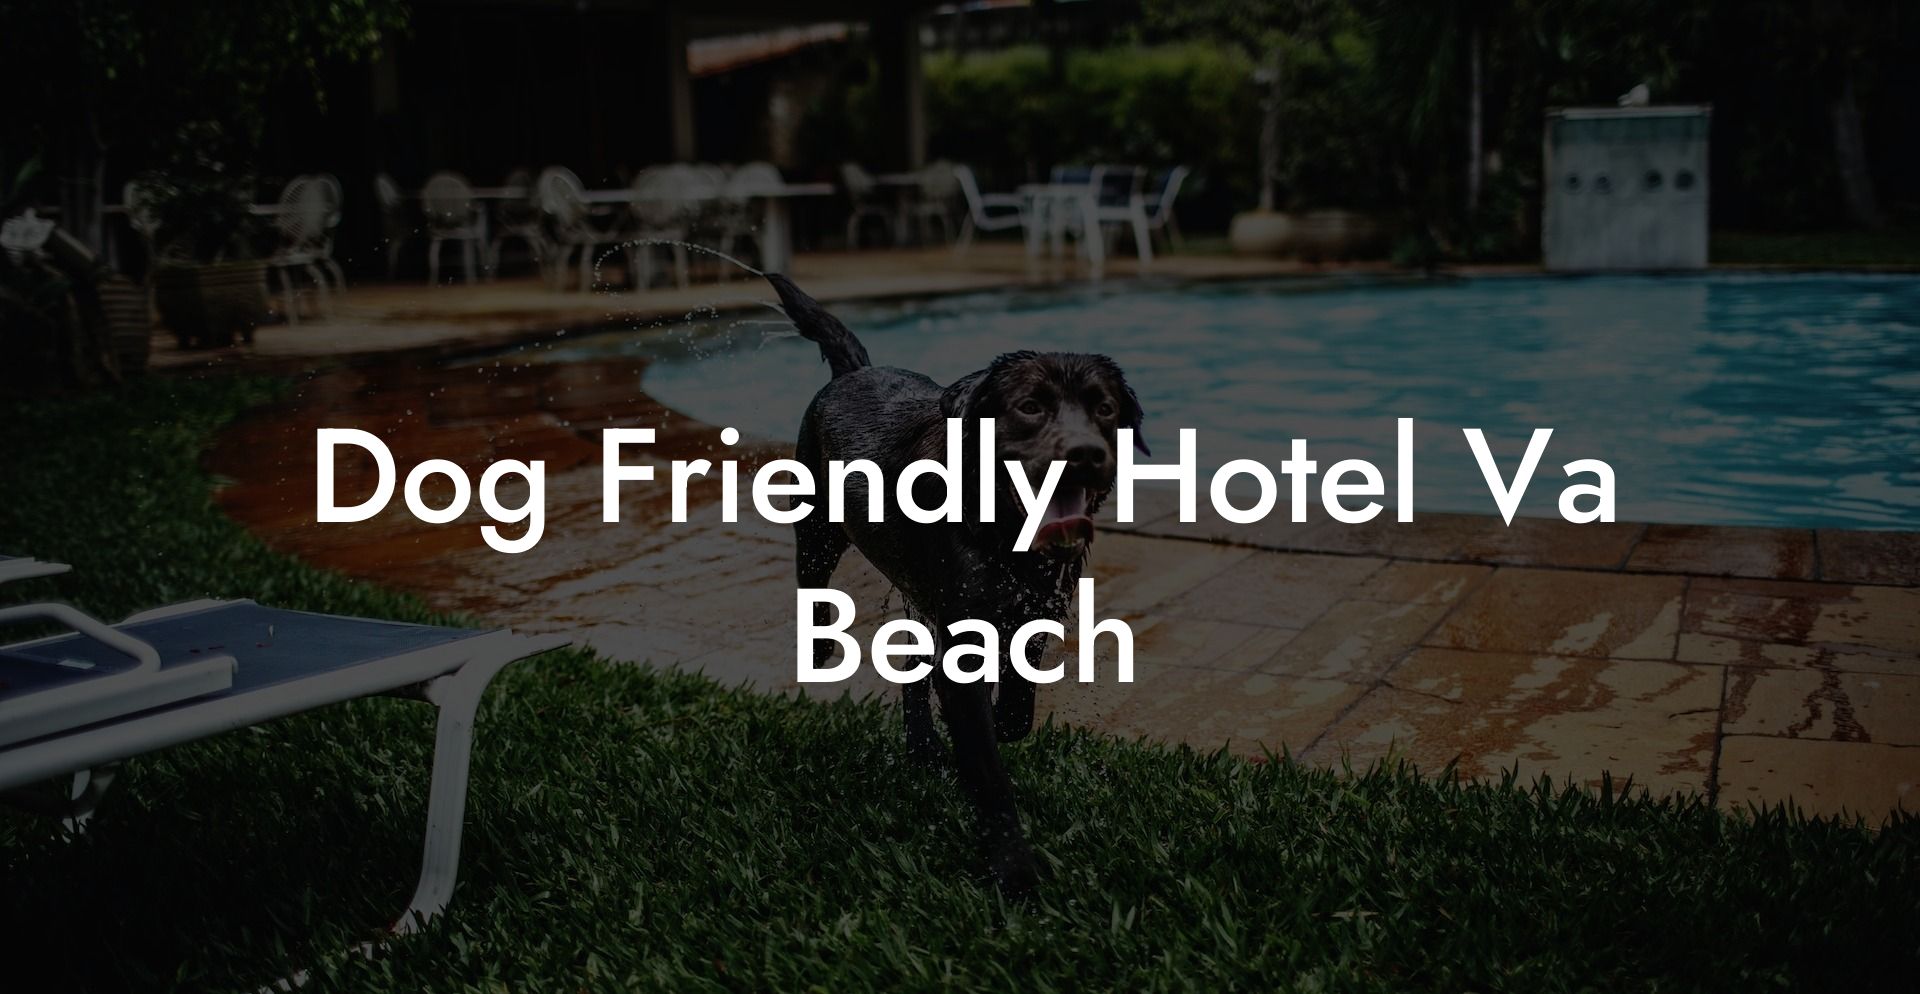 Dog Friendly Hotel Va Beach